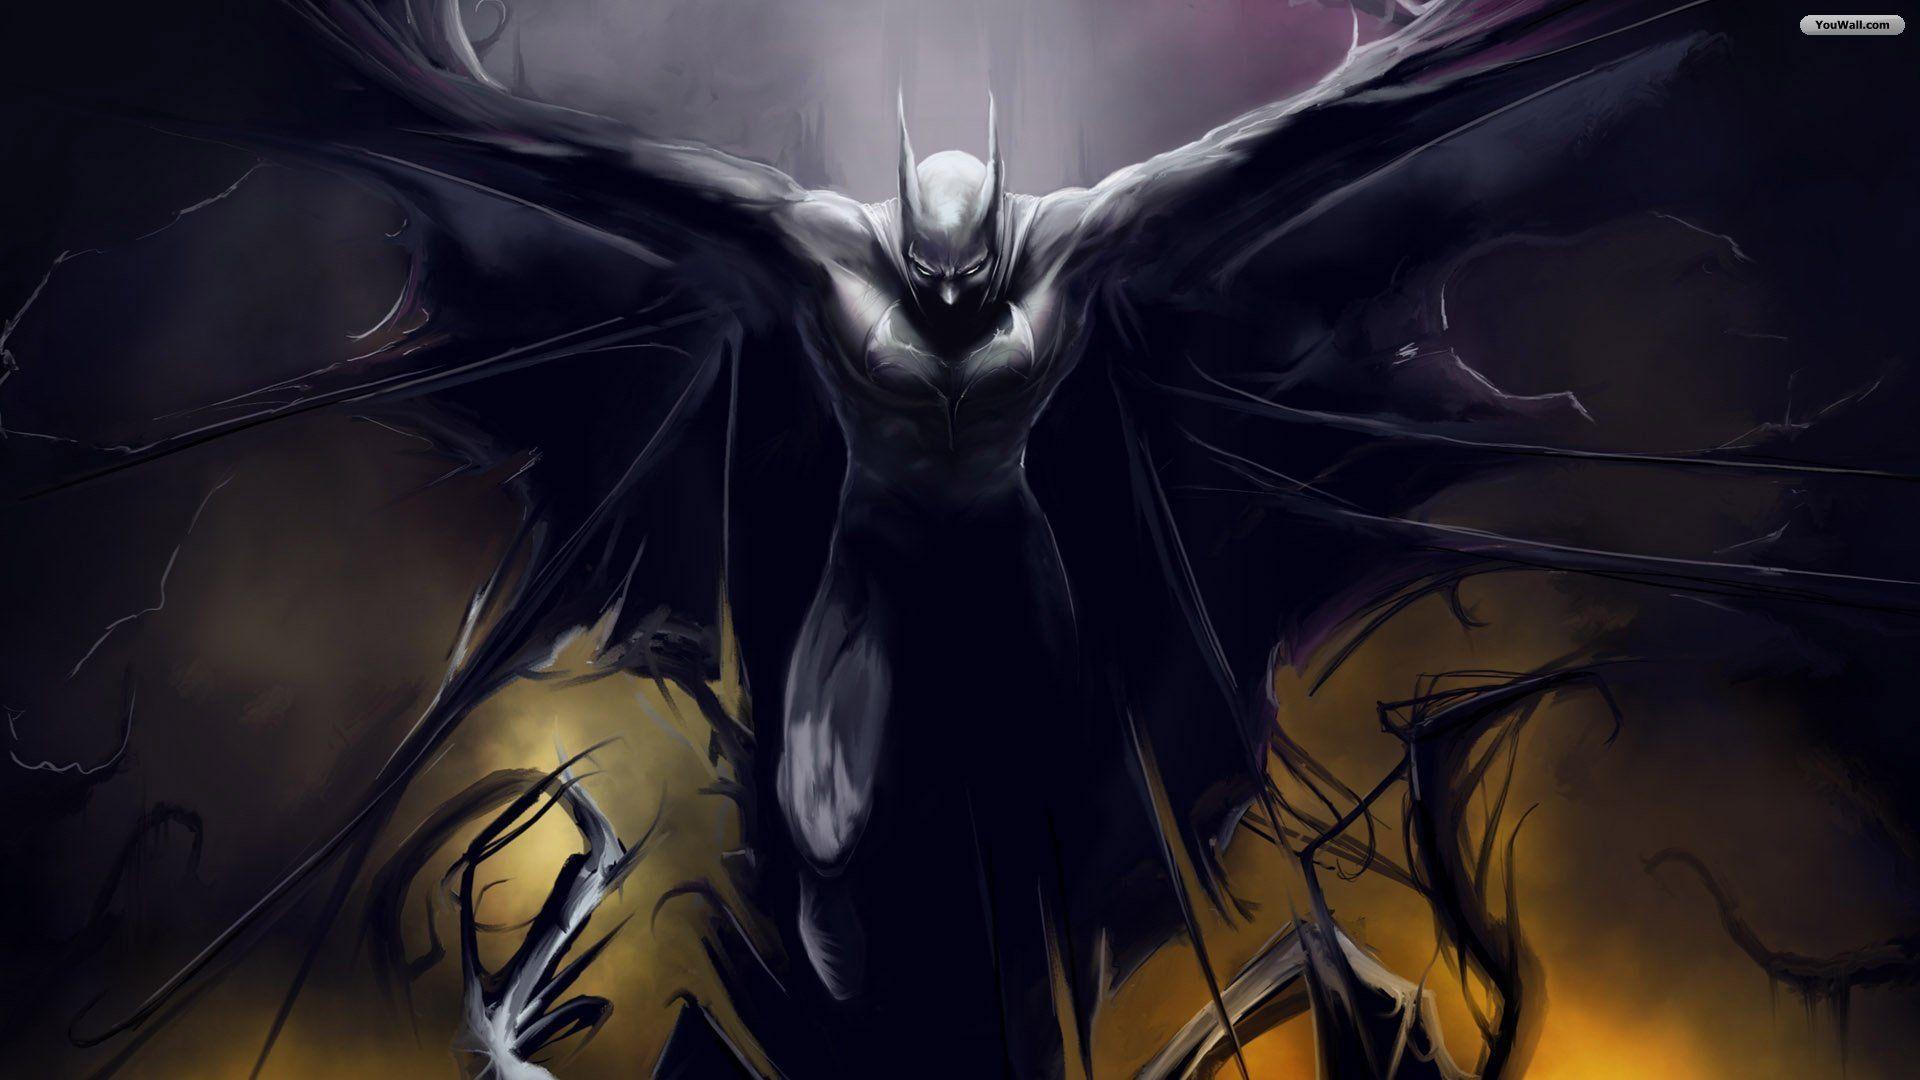 Batman Cartoon Full HD Background Image for Mac